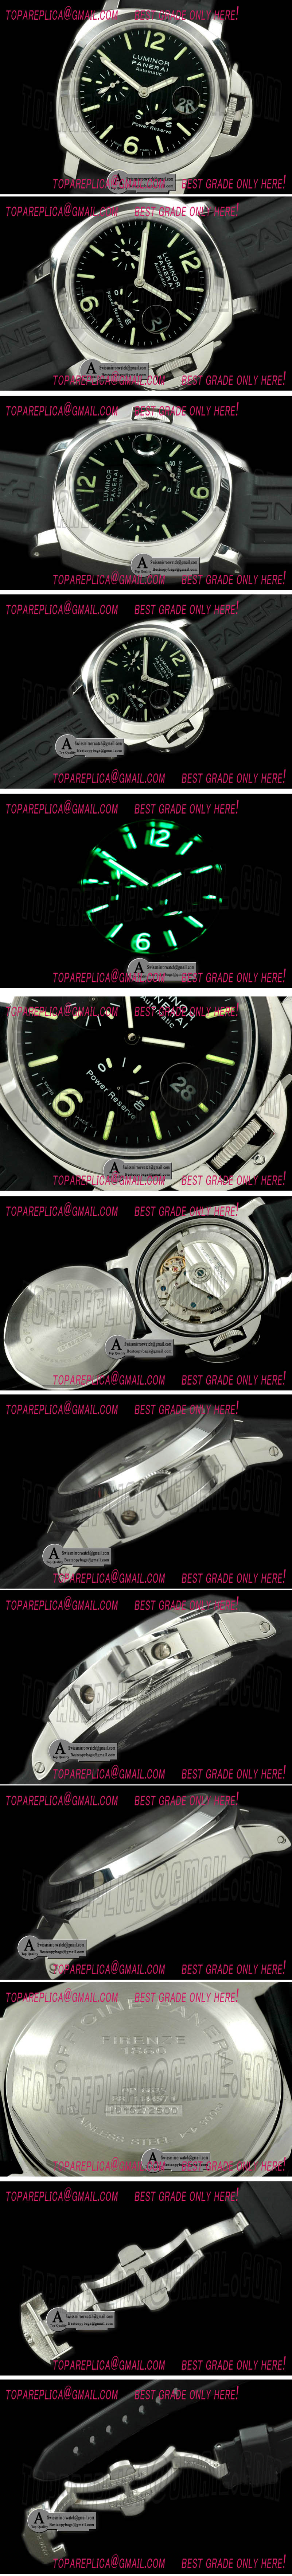 Panerai PAM 090I SS/Rubber Black A-7750 Replica Watches